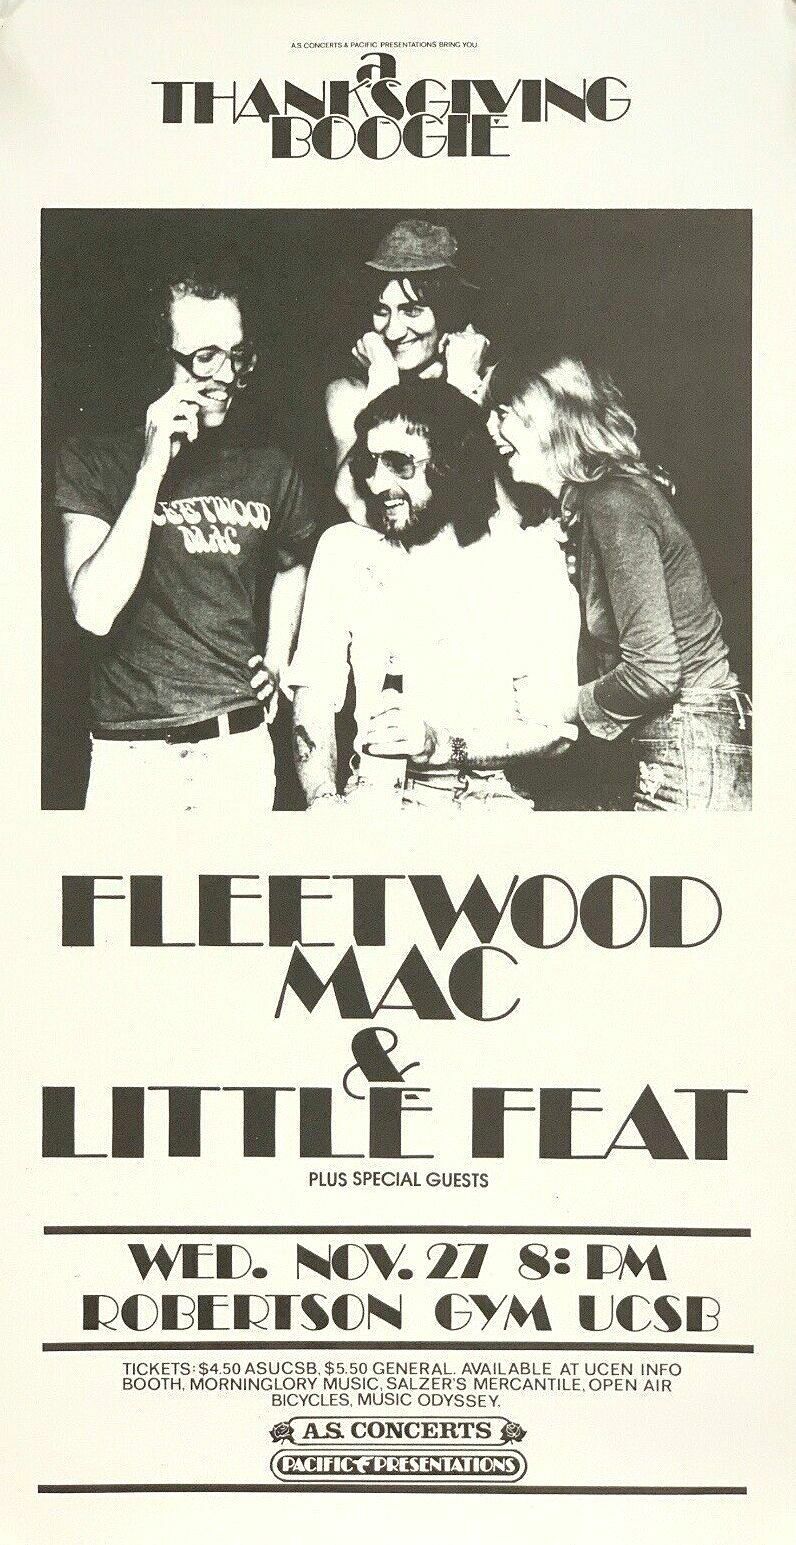 FLEETWOOD MAC / LITTLE FEAT 1974 ROBERTSON GYM UCSB CONCERT POSTER / NM 2 MINT